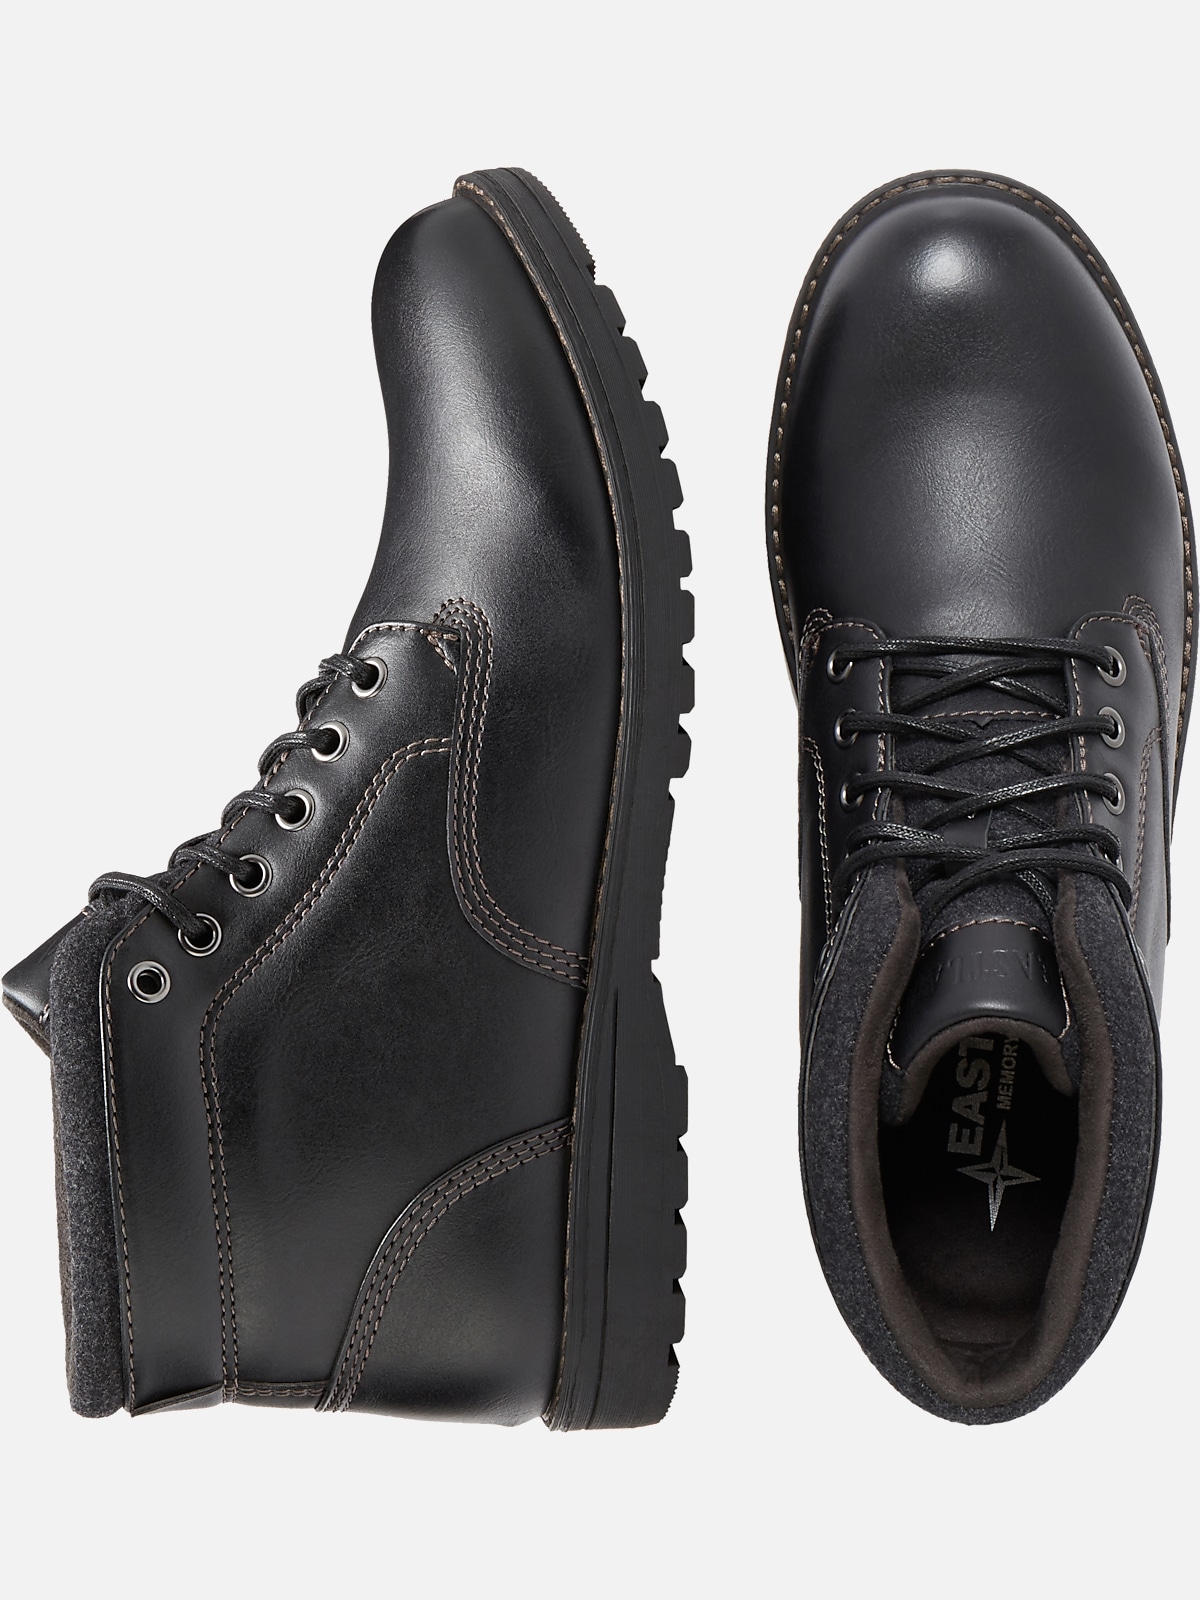 Eastland Finn Plain Toe Lace Up Boots | Boots| Men's Wearhouse